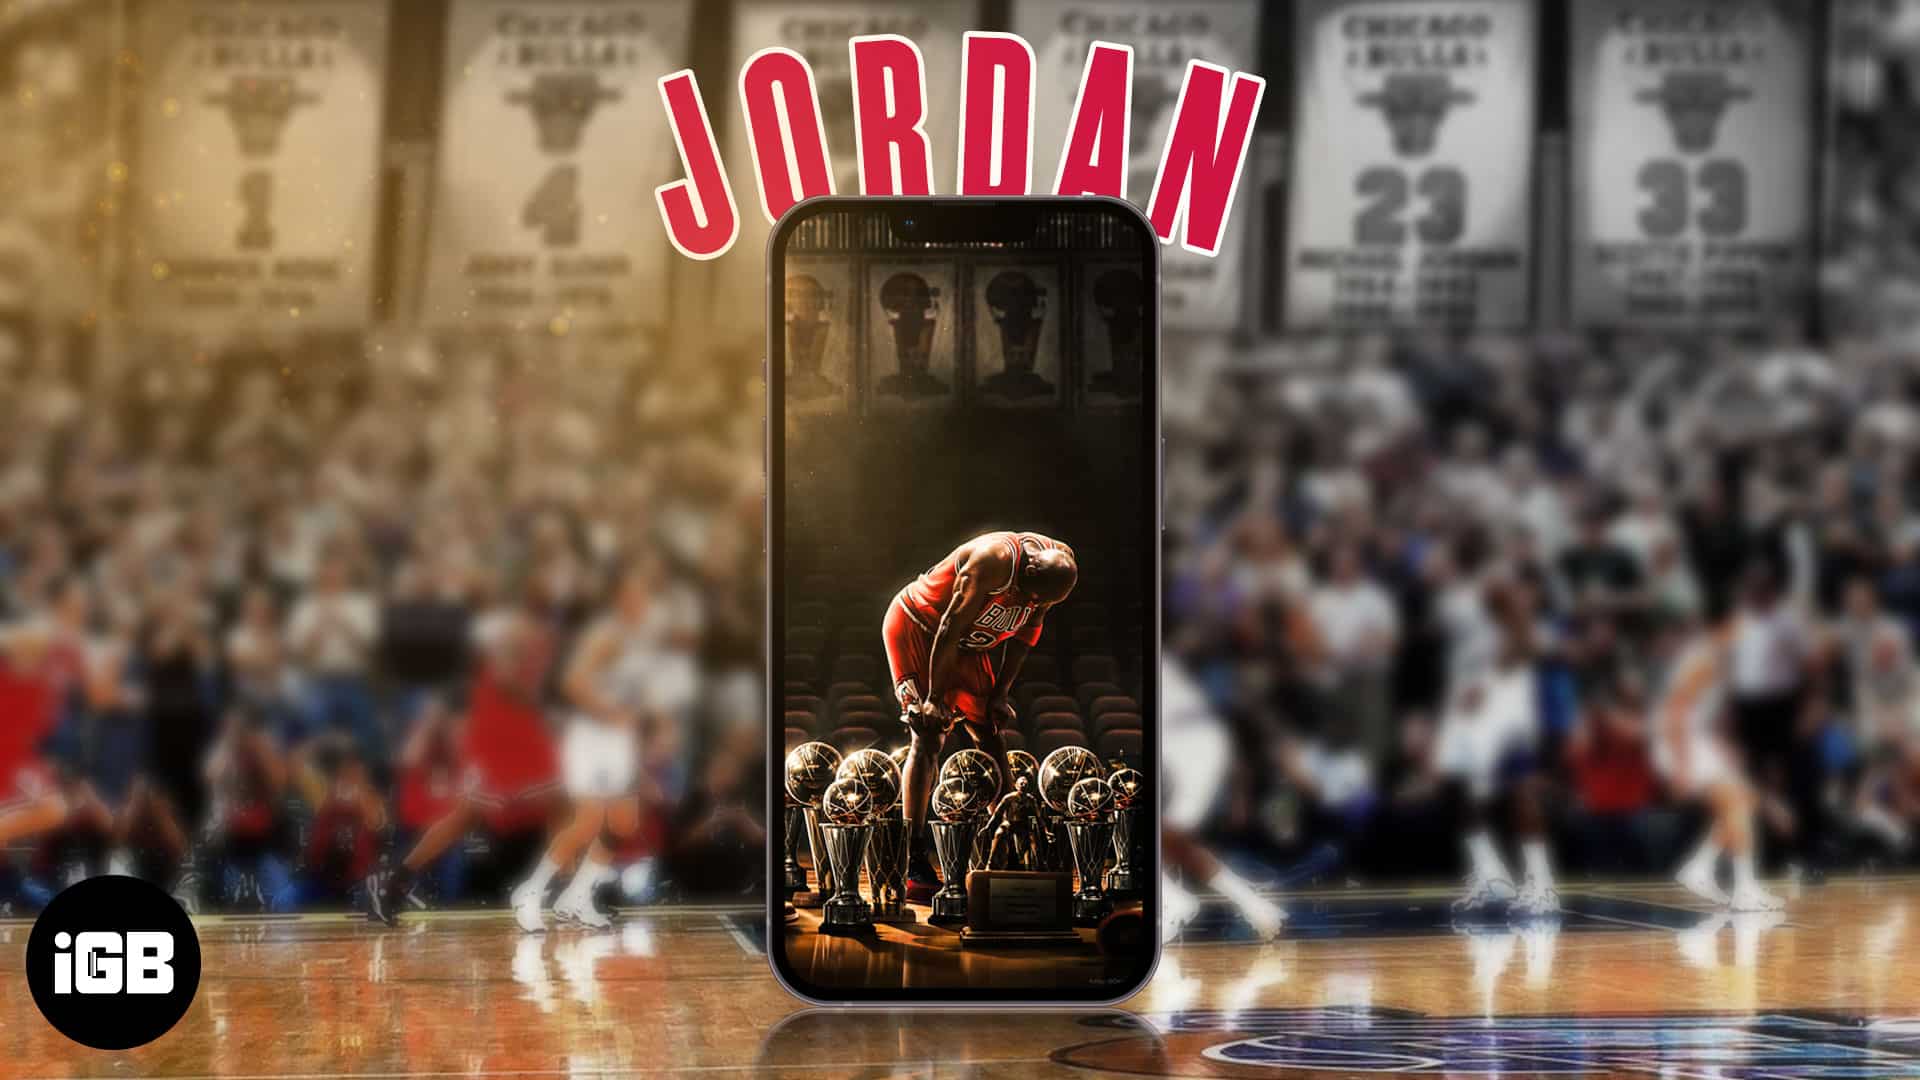 Air jordan logo iphone background  Jordan logo wallpaper Iphone wallpaper  jordan Nike wallpaper